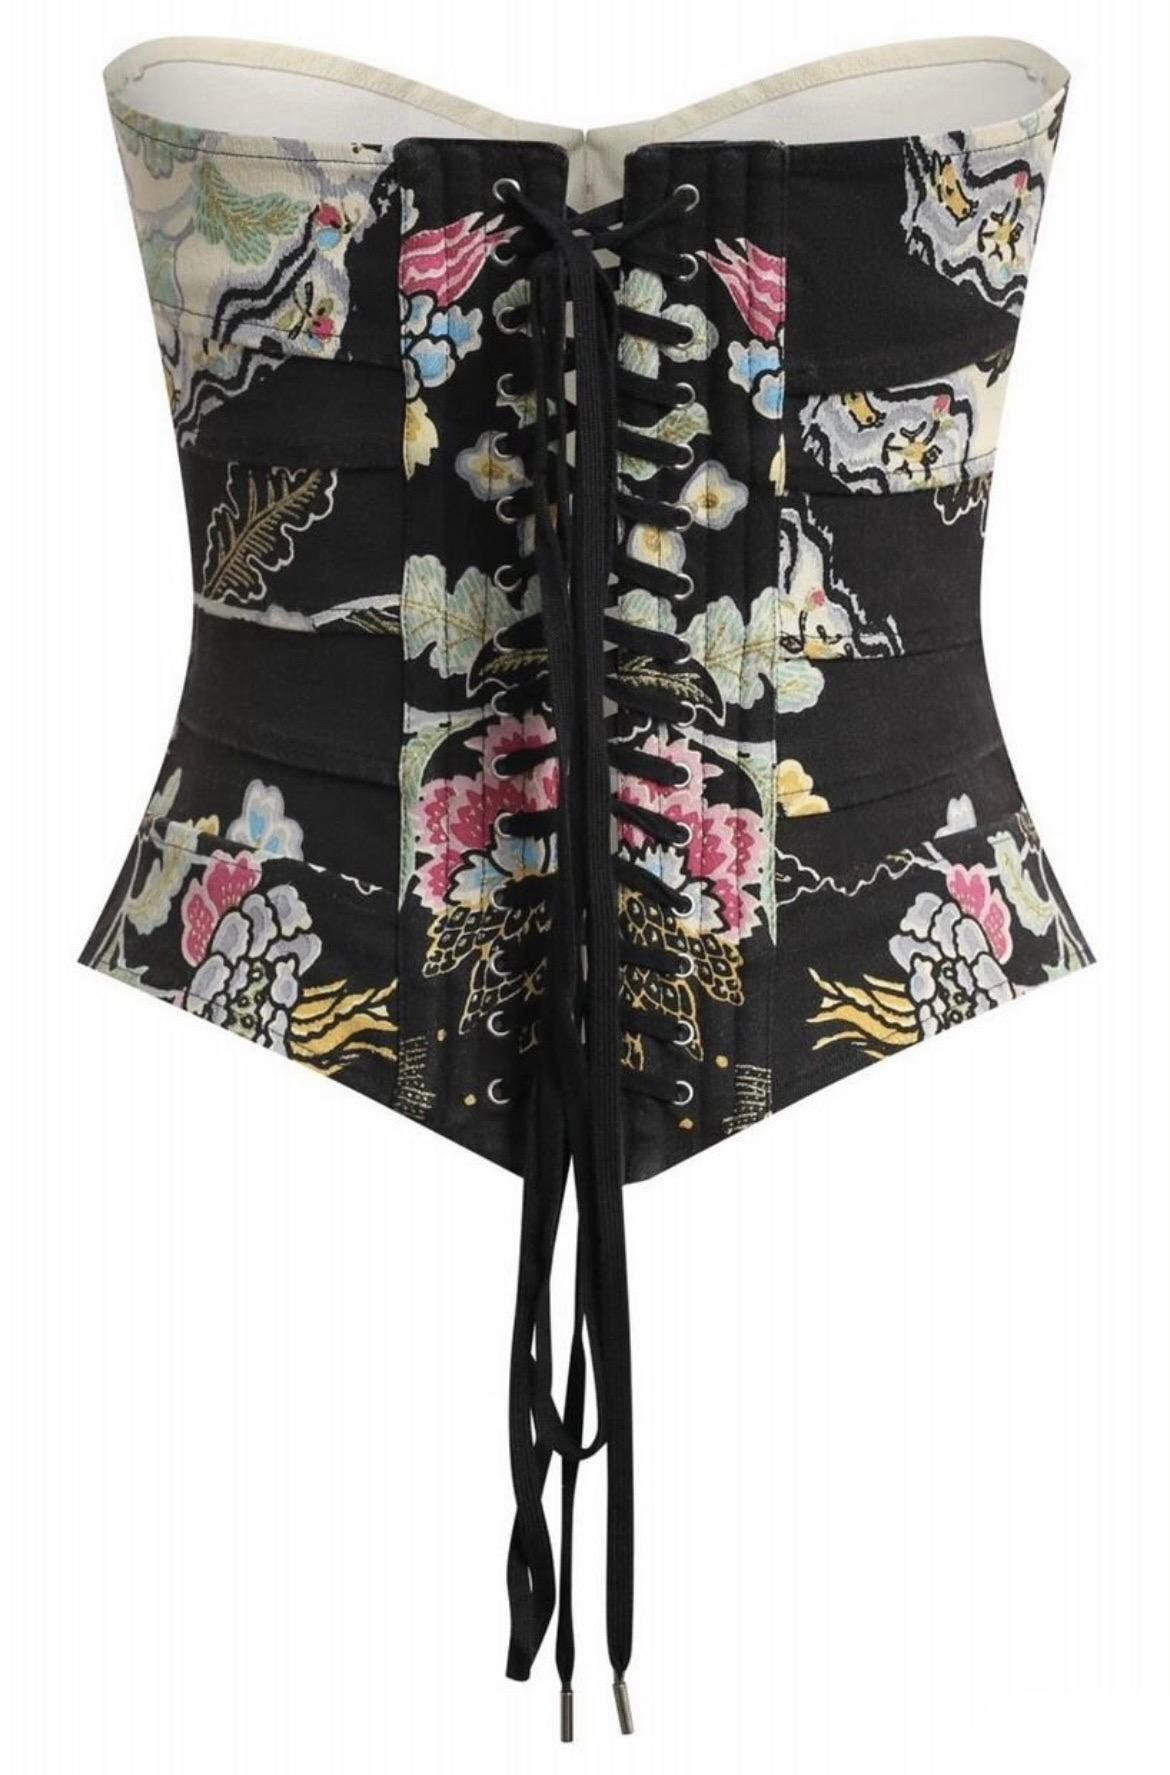 Vintage Roberto Cavalli corset
Size S
Cotton
Made in Italy 
Excellent condition
Circa 2003